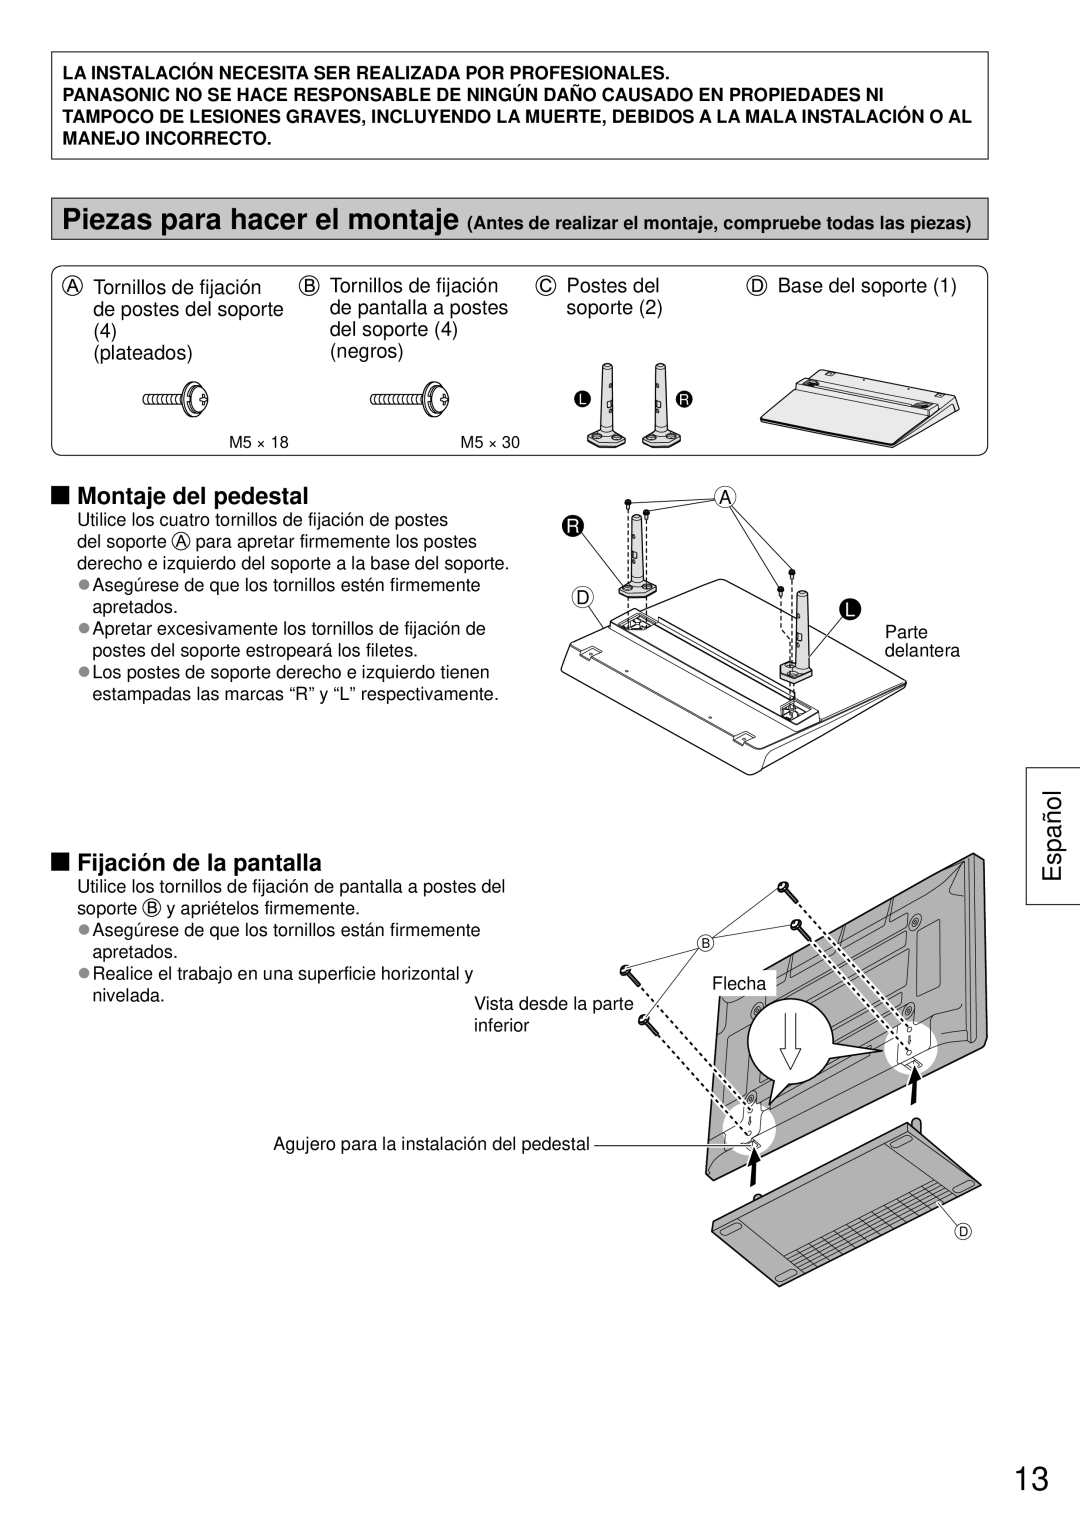 Panasonic TY-ST50VX100 installation instructions Montaje del pedestal, Fijación de la pantalla, Español 